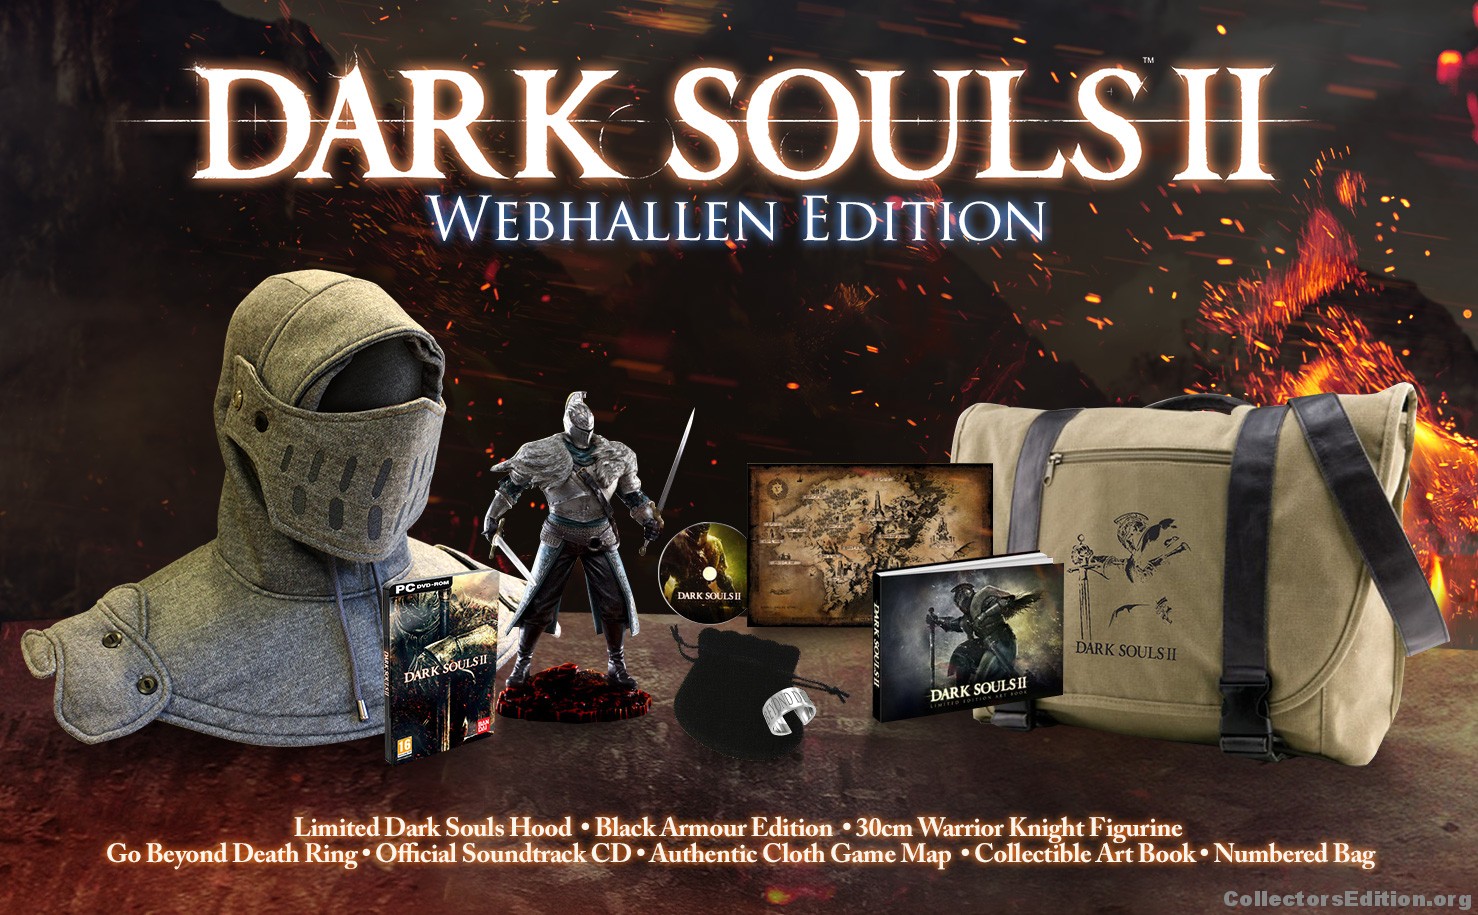 Collectorsedition Org Dark Souls Ii Webhallen Edition Pc Dvd Rom